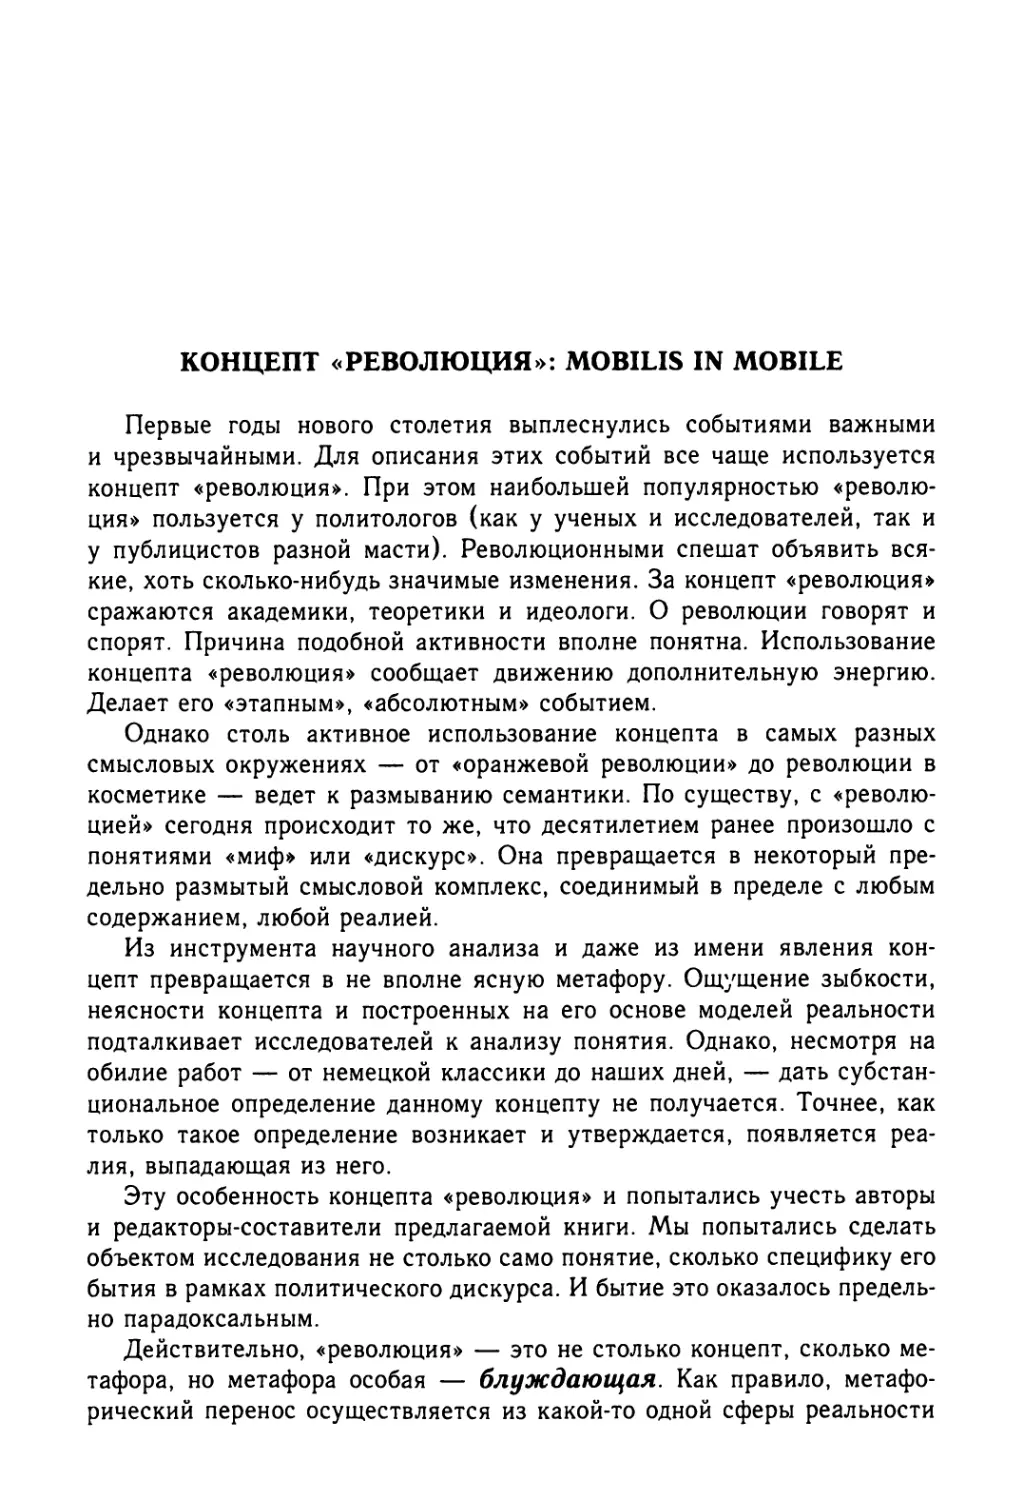 Леонид Бляхер, Александр Павлов. Концепт «революция»: mobilis in mobile